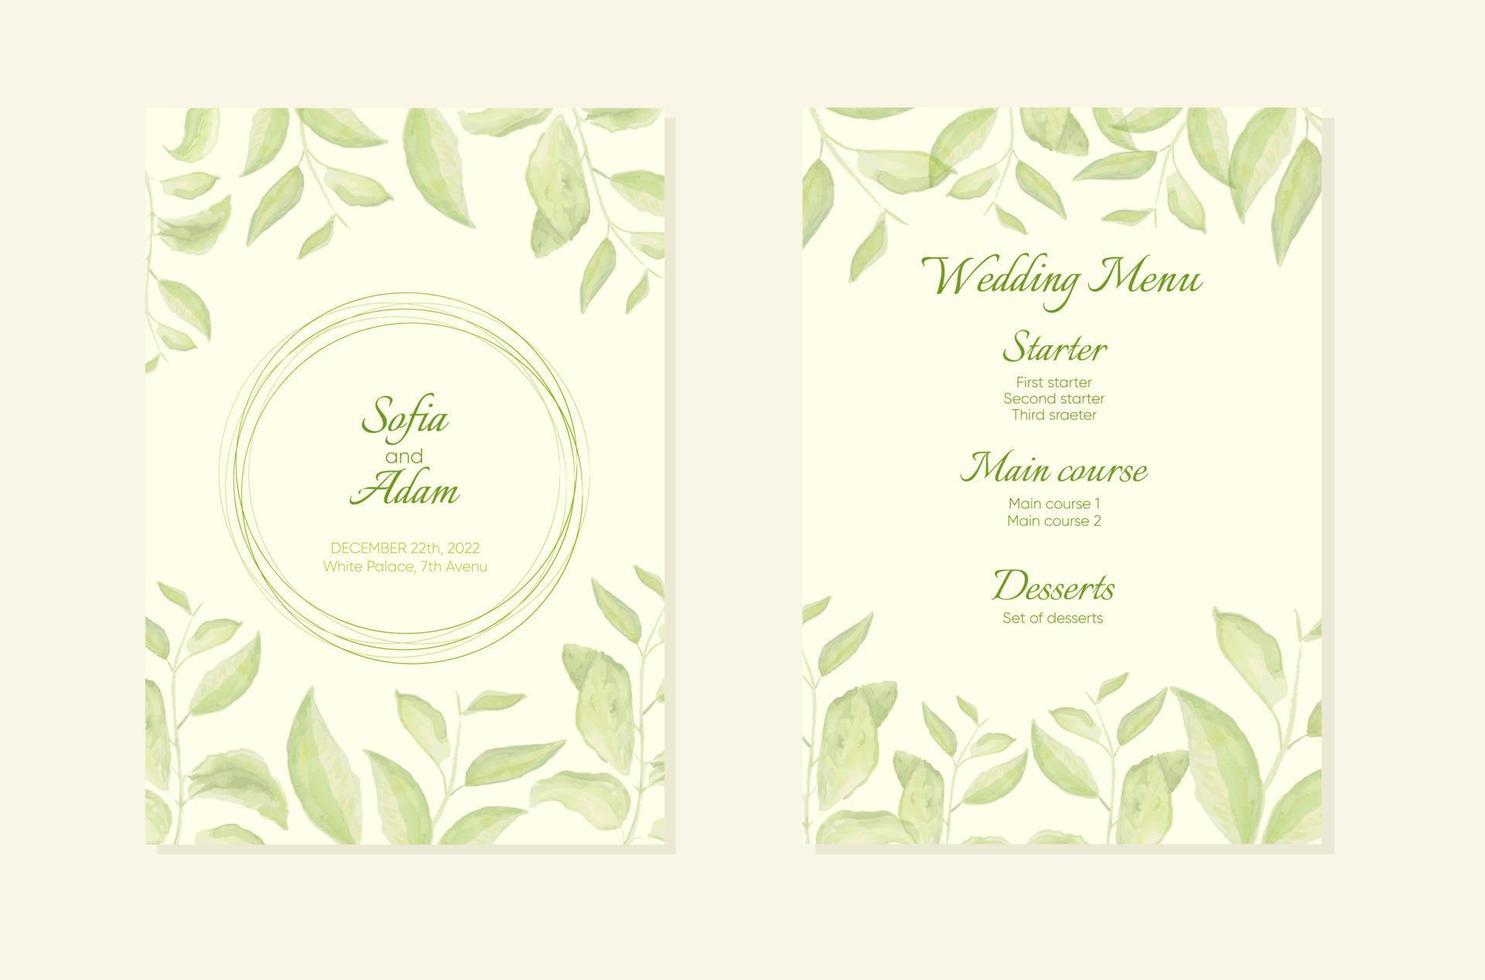 marco vectorial minimalista a base de hierbas. ramas pintadas a mano sobre fondo blanco. invitación de boda verde. estilo acuarela. vector